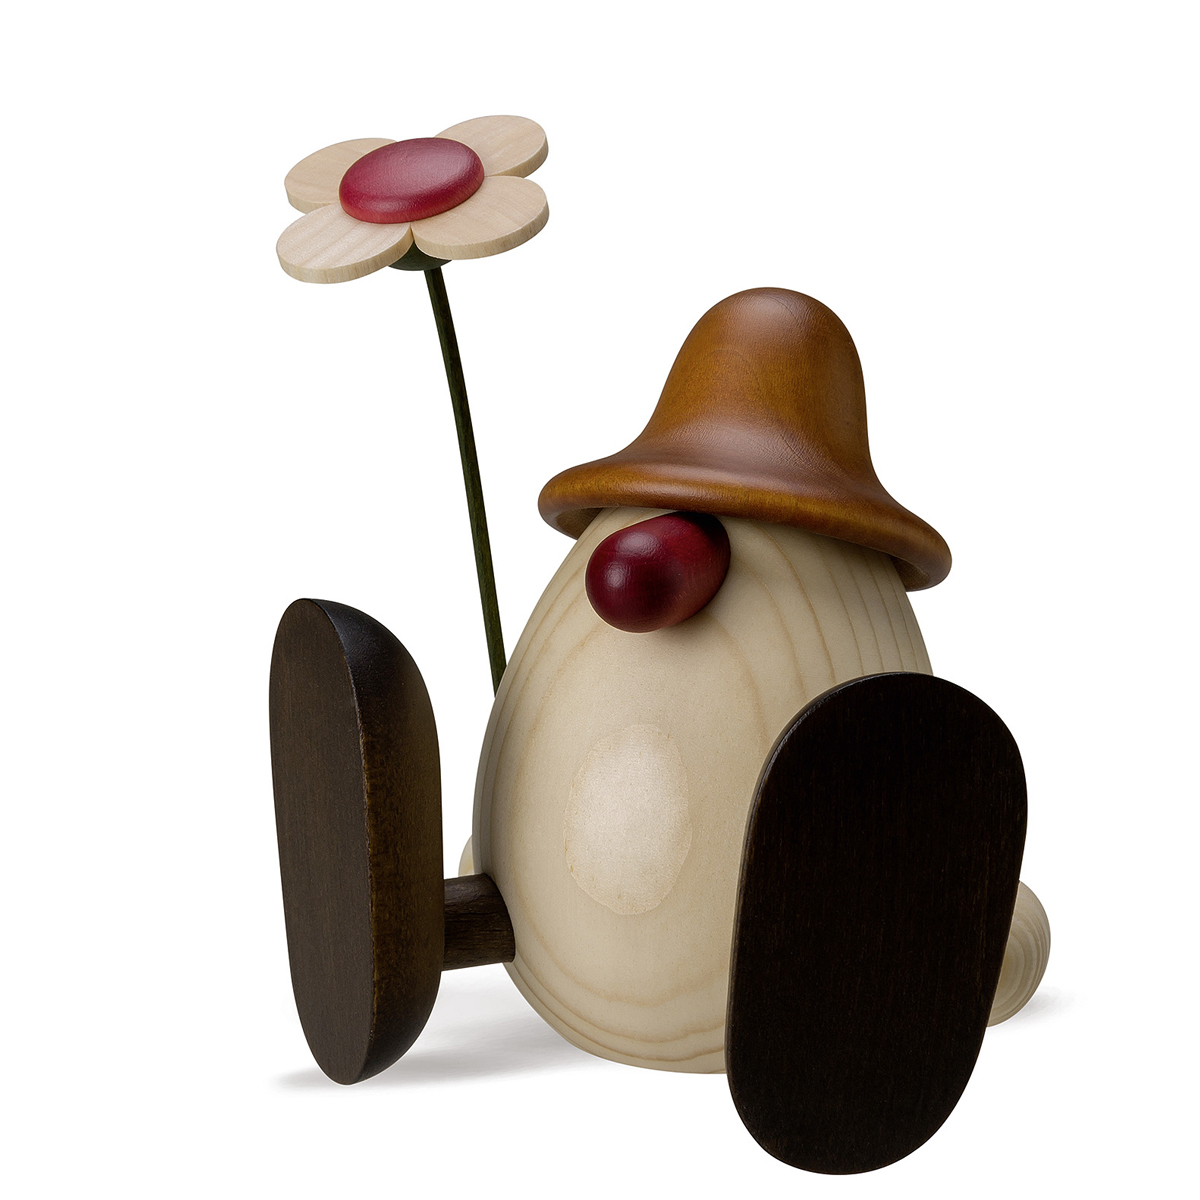 Egghead Erwin sitting, with flower, brown